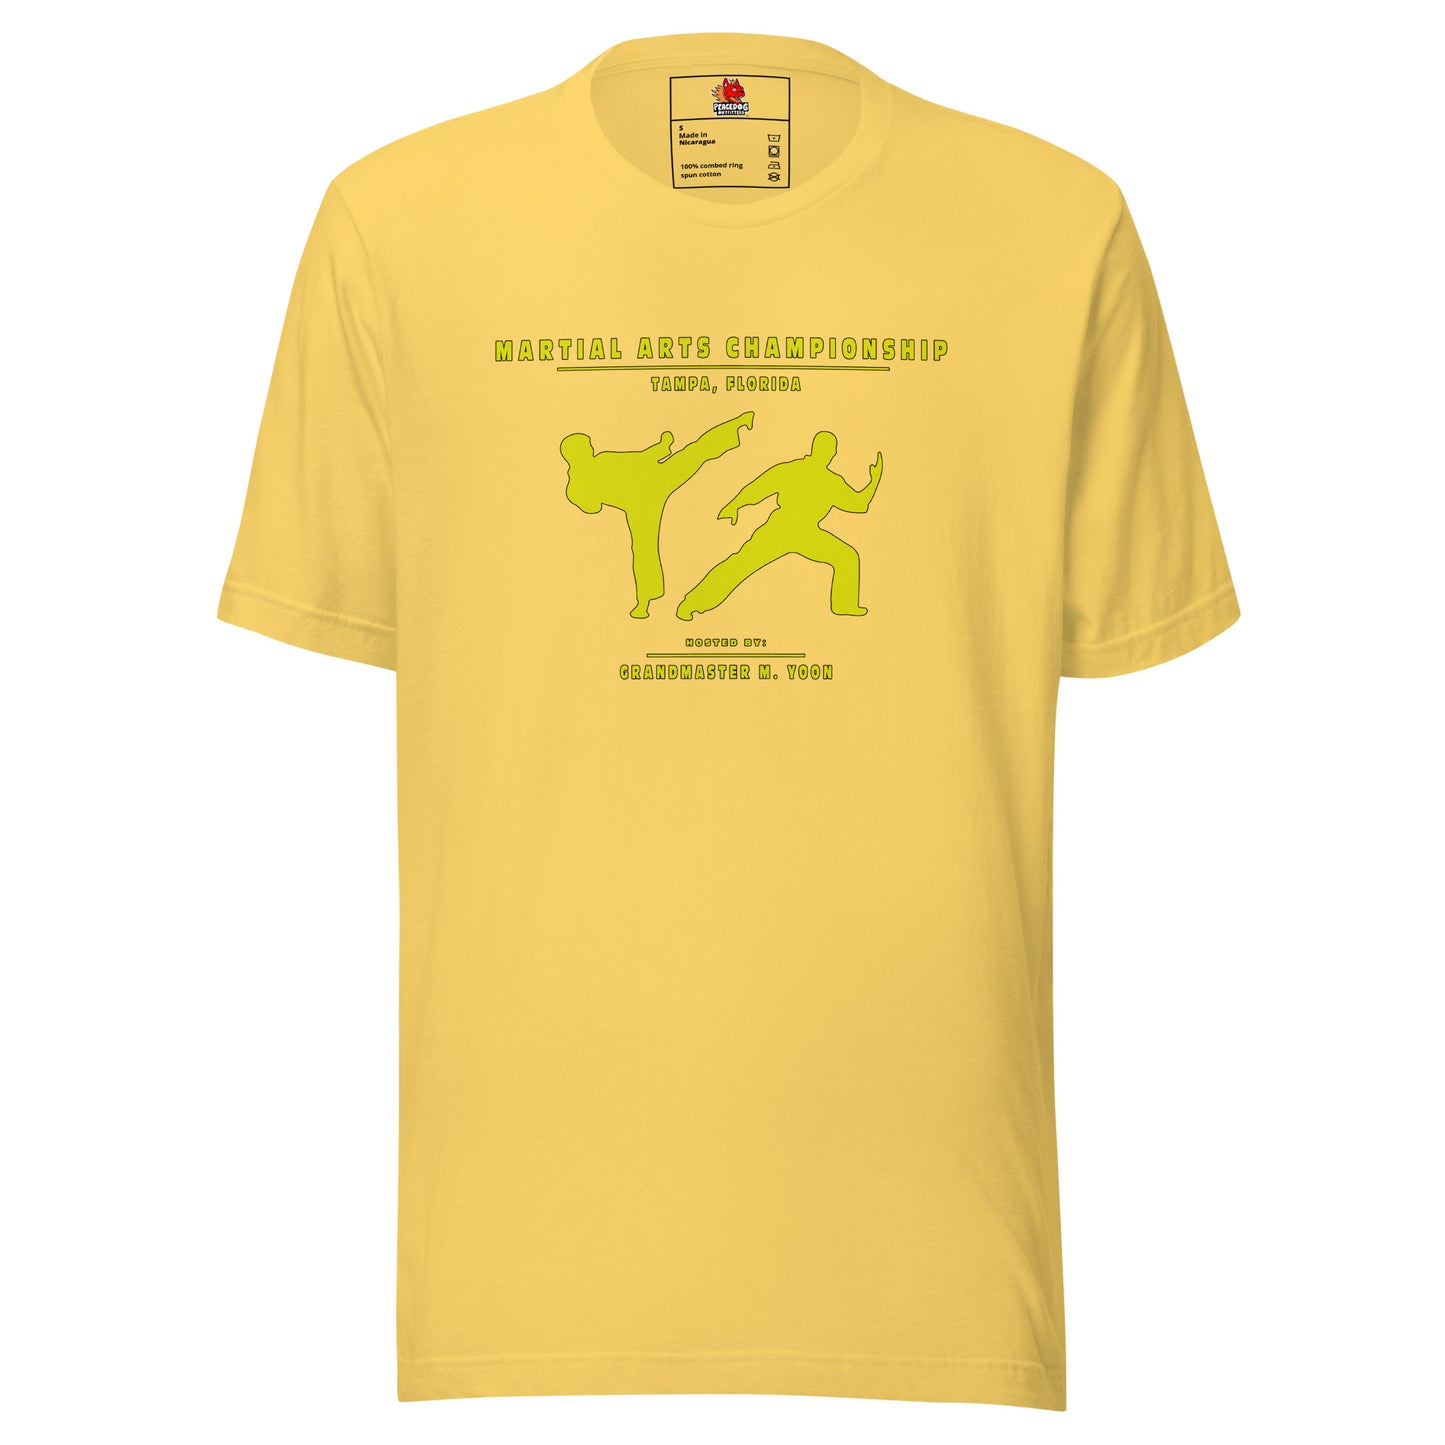 Martial Arts Championship T-shirt